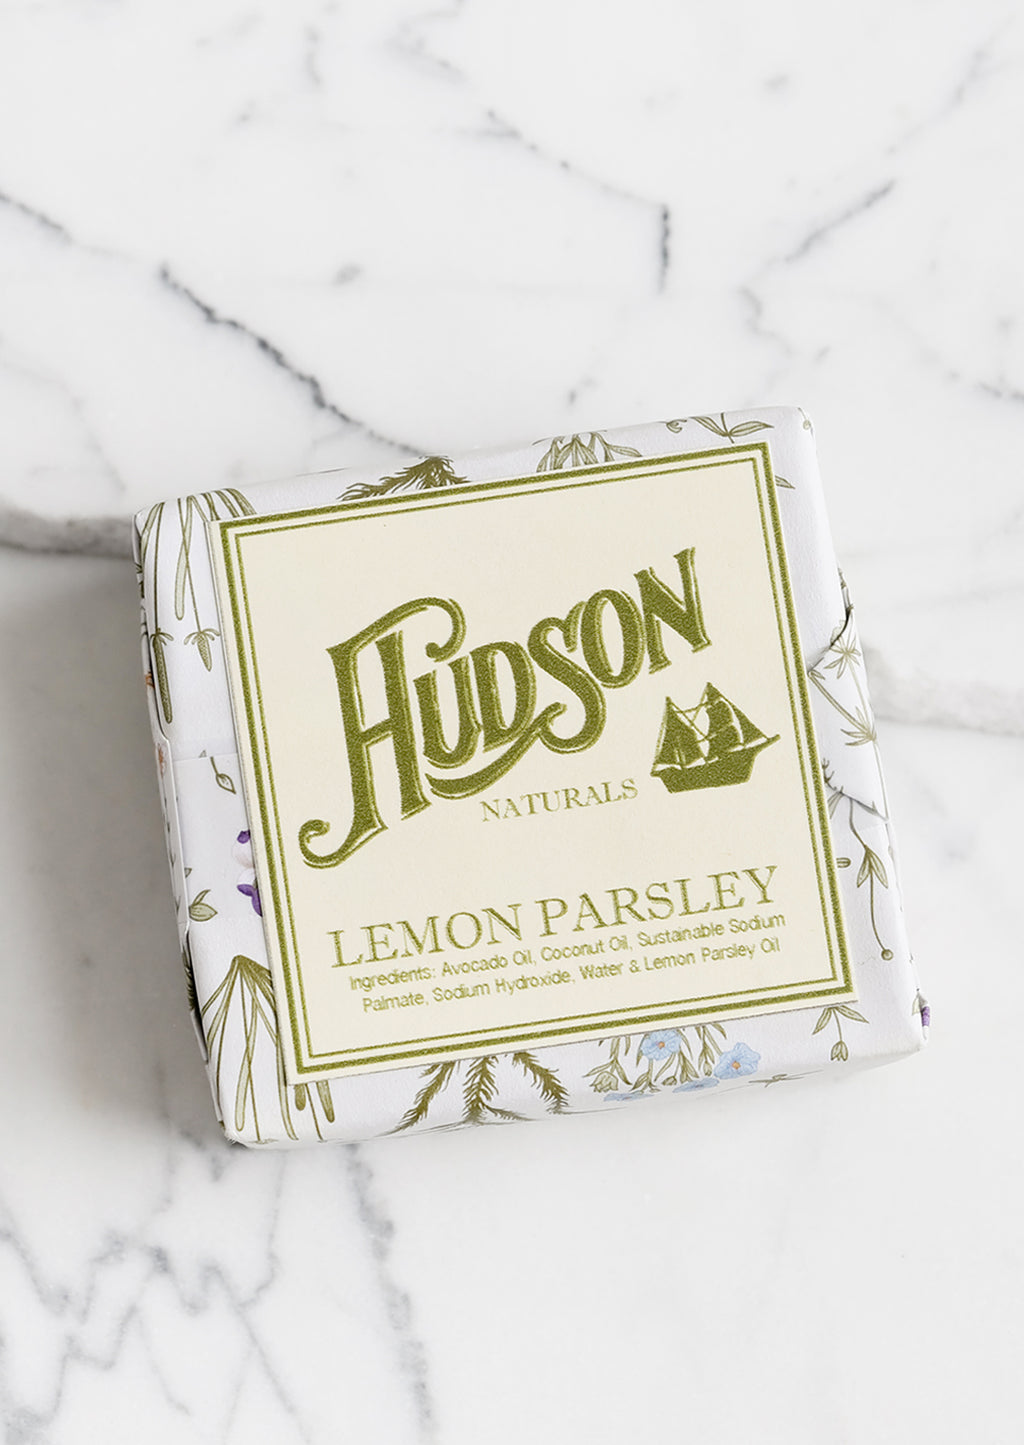 Lemon Parsley: A square bar of soap in botanical printed packaging in Lemon Parsley scent.